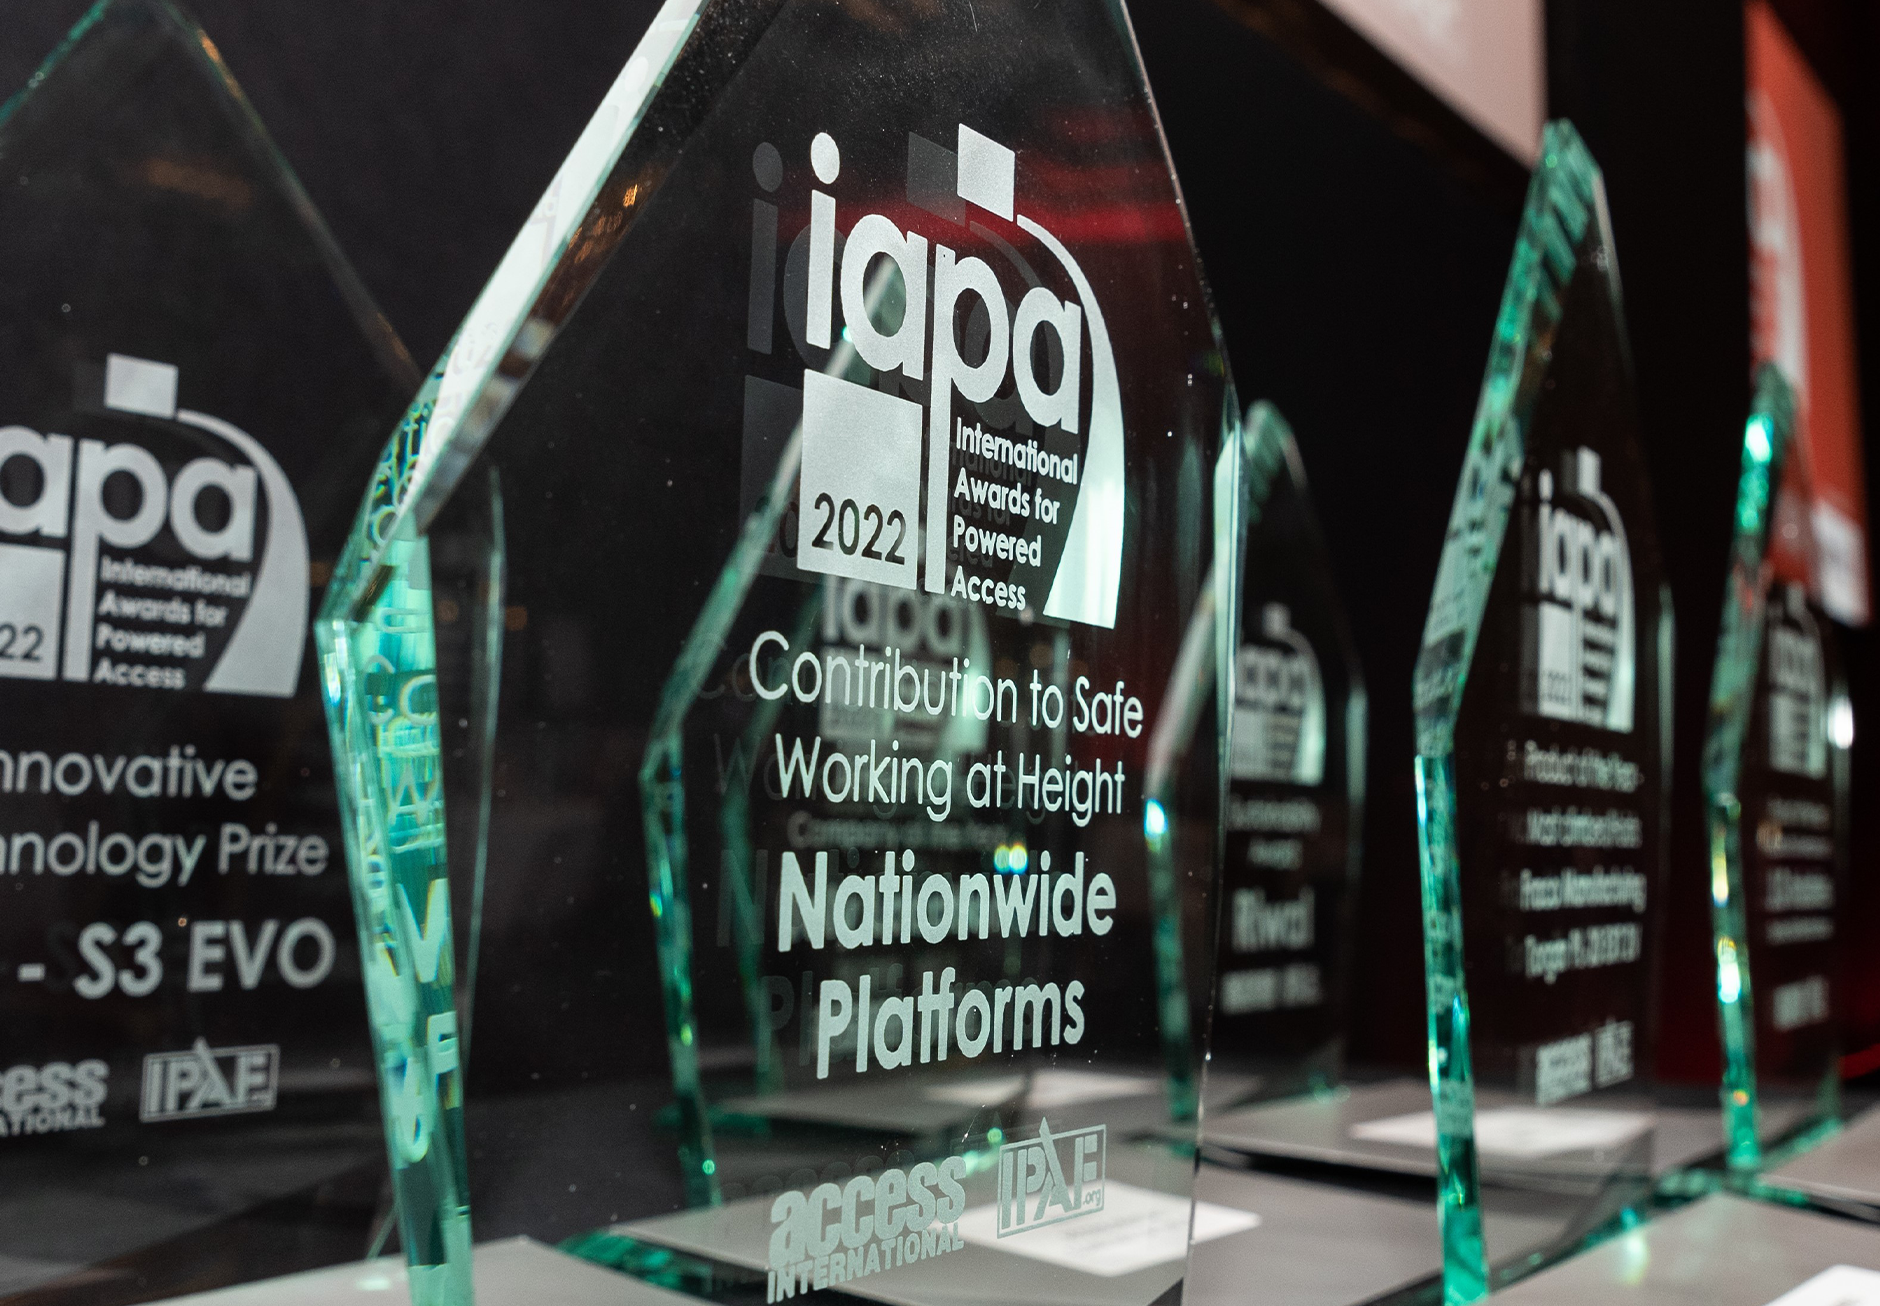 Nationwide Platforms enjoys double industry awards success